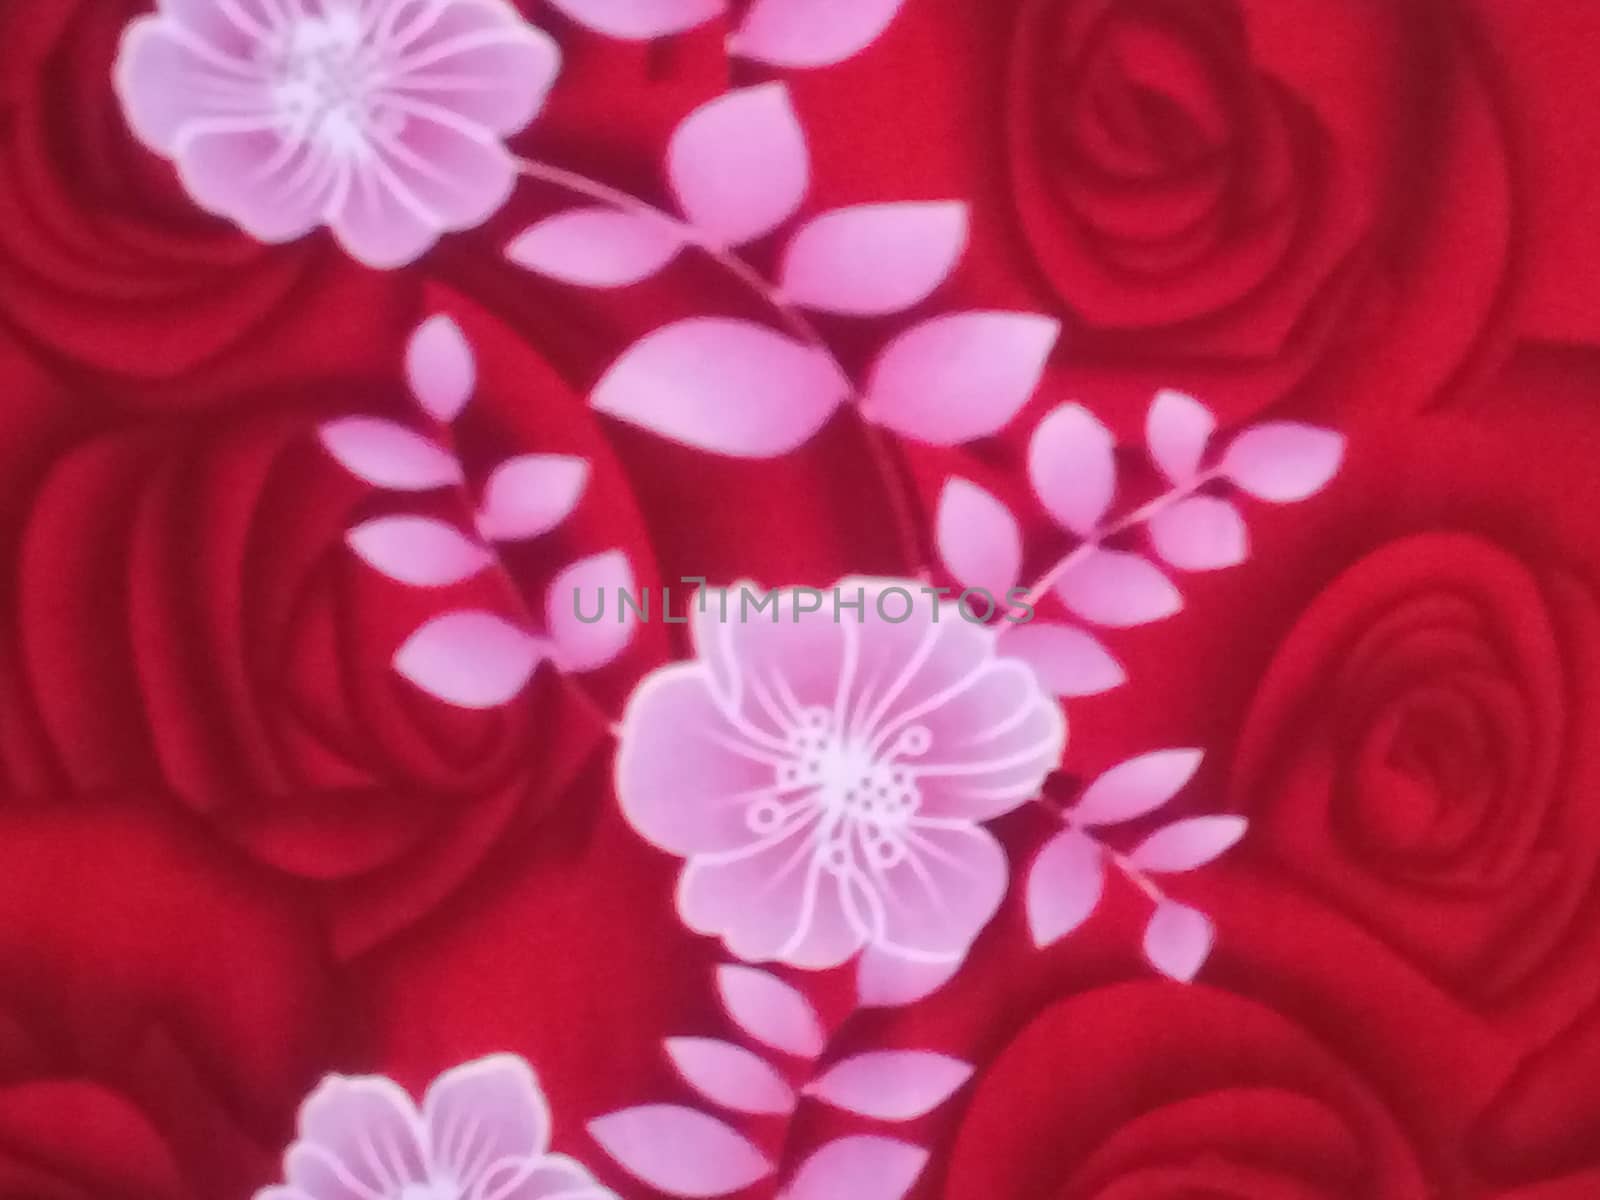 white flower art work on red bedsheets